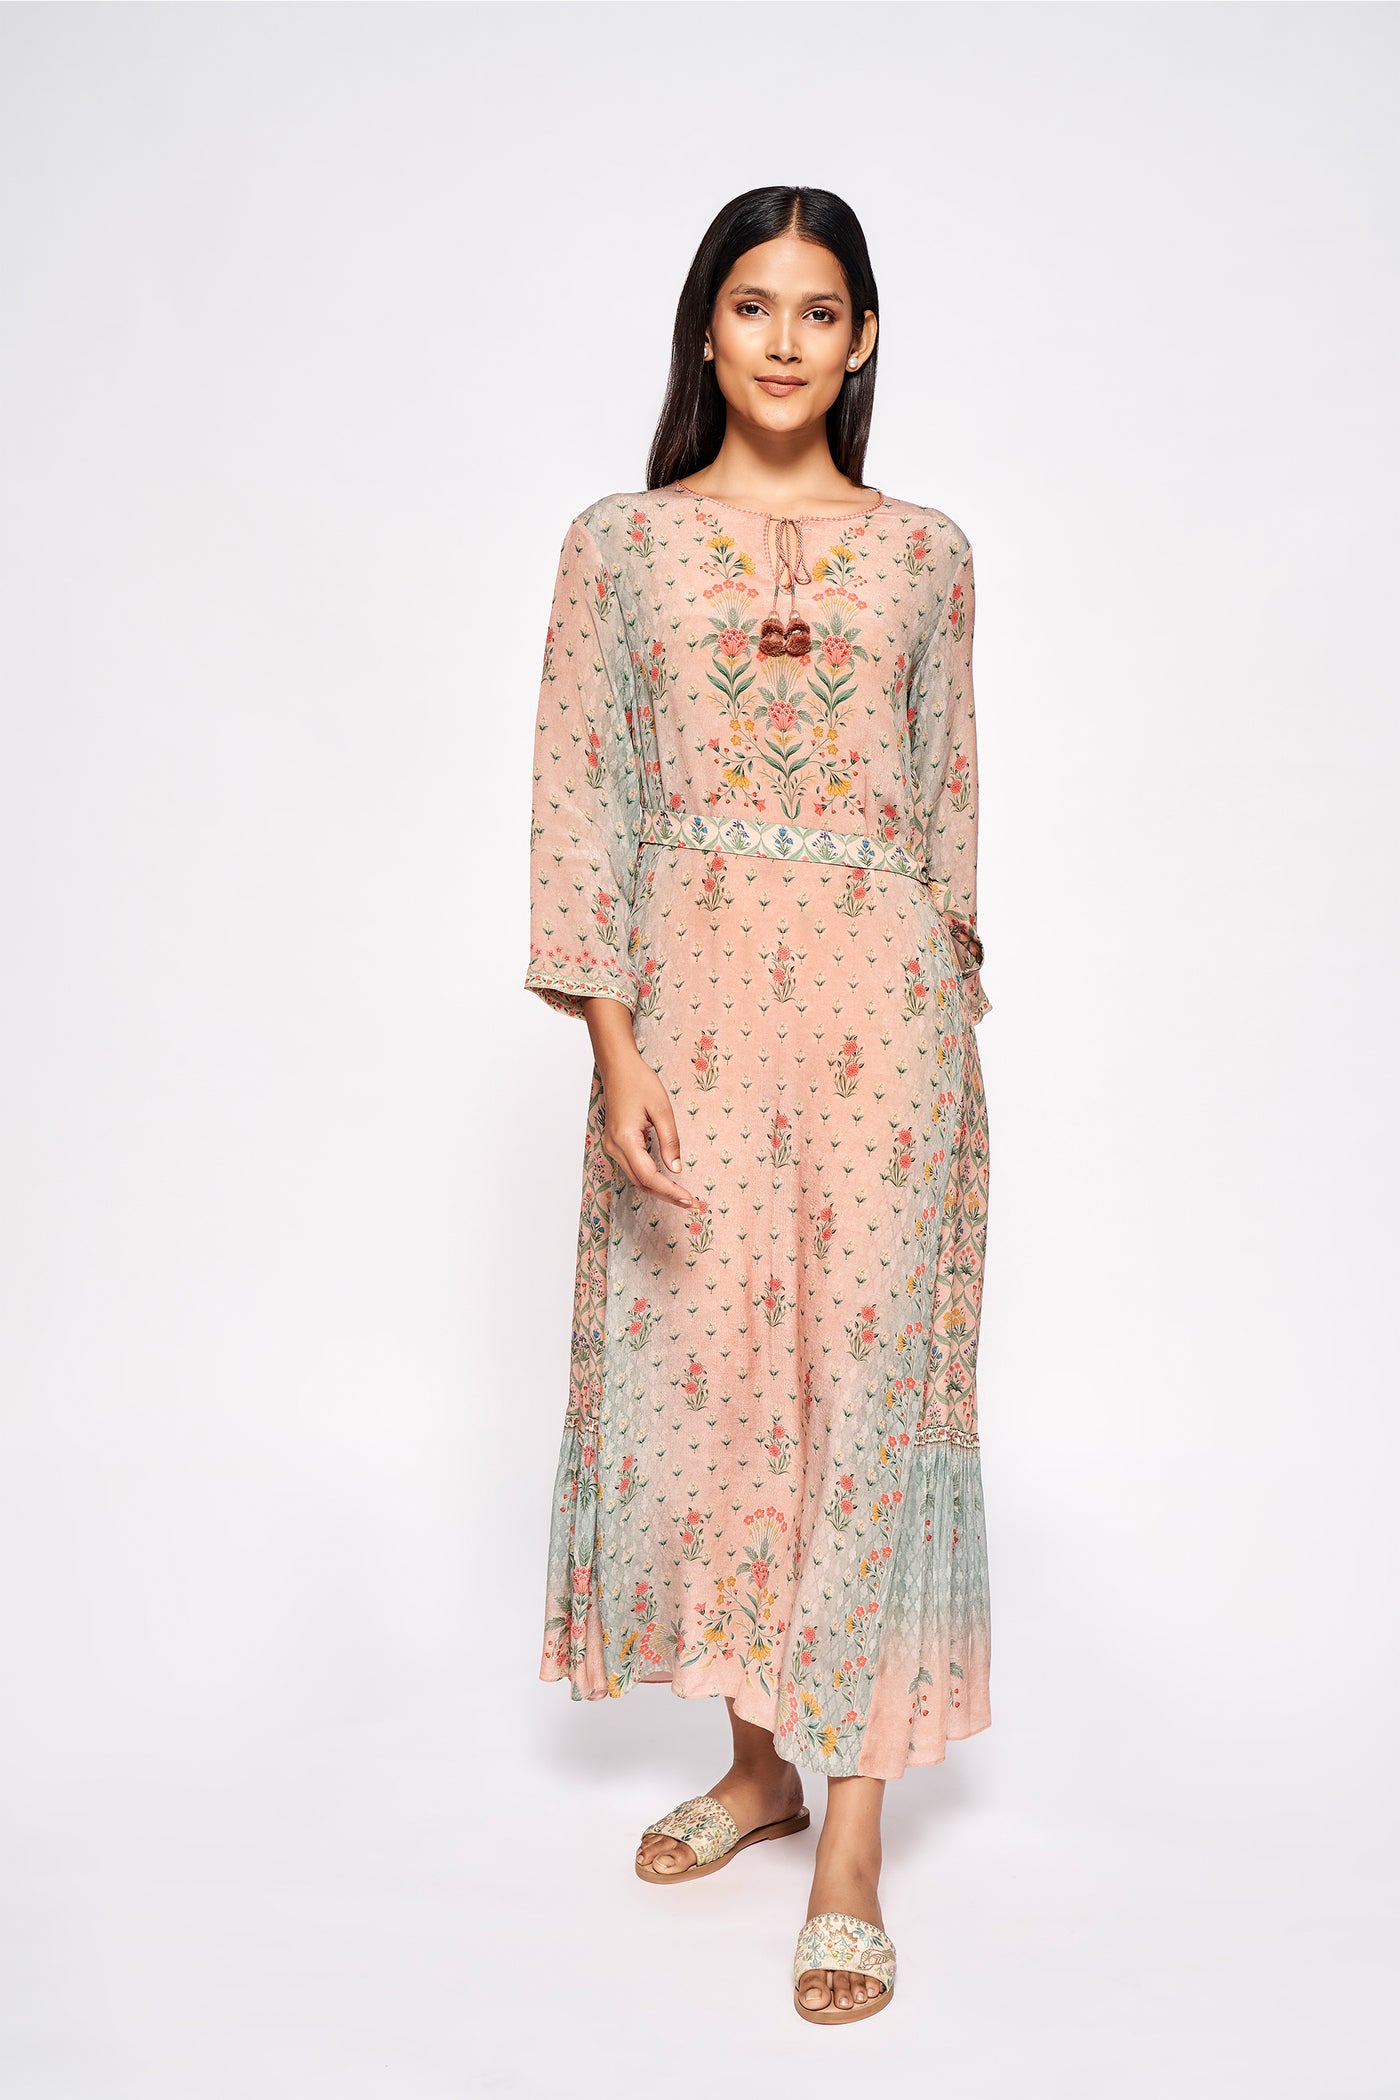 Anita Dongre Devina Dress Pink western indian designer wear online shopping melange singapore